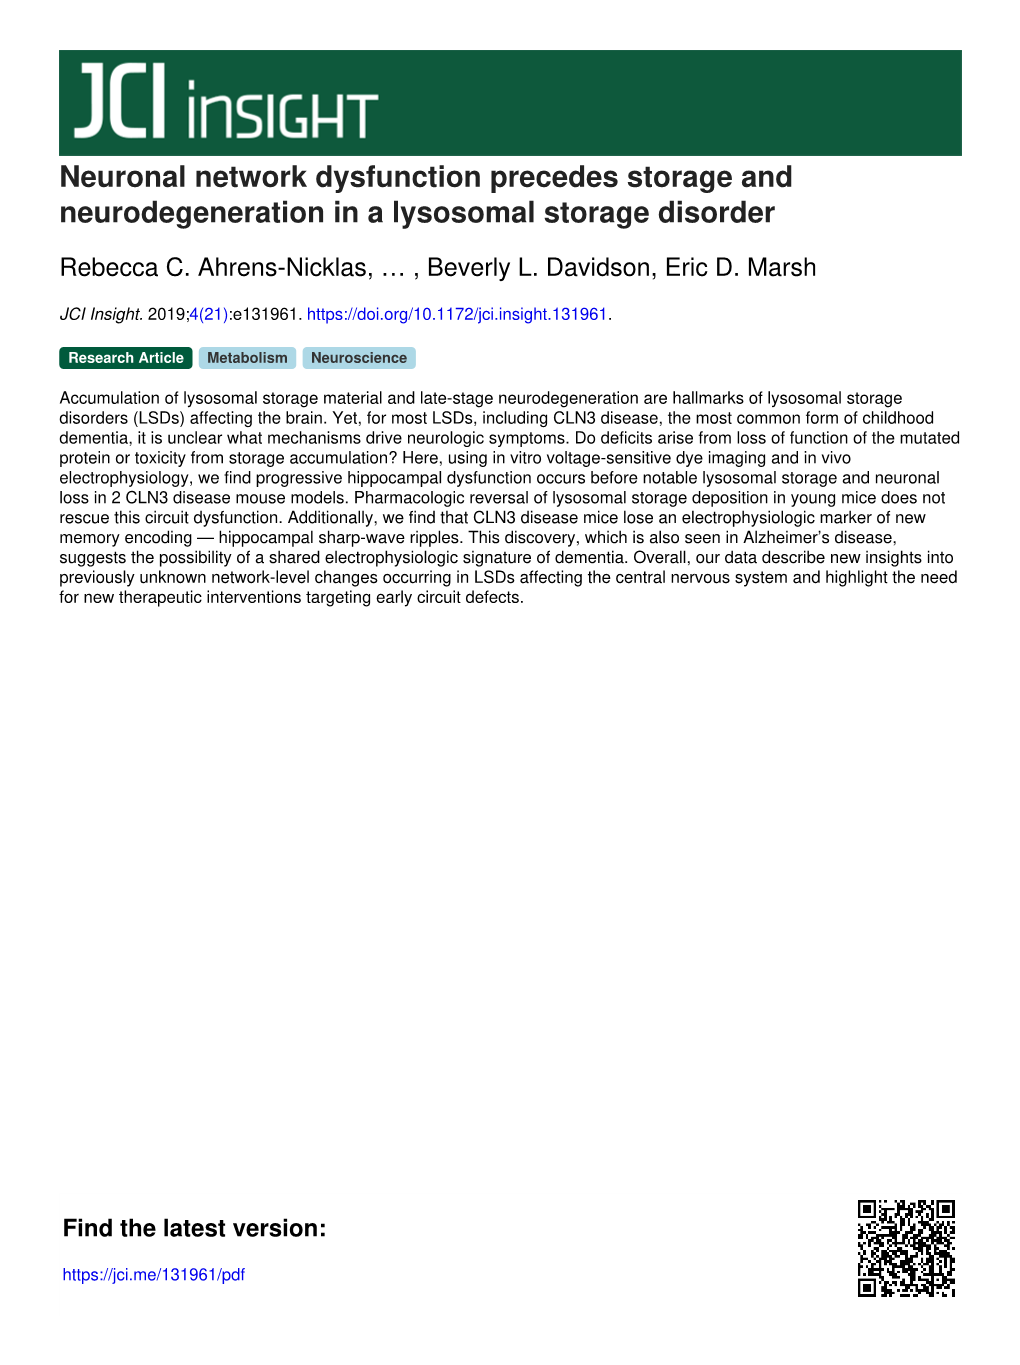 Neuronal Network Dysfunction Precedes Storage and Neurodegeneration in a Lysosomal Storage Disorder